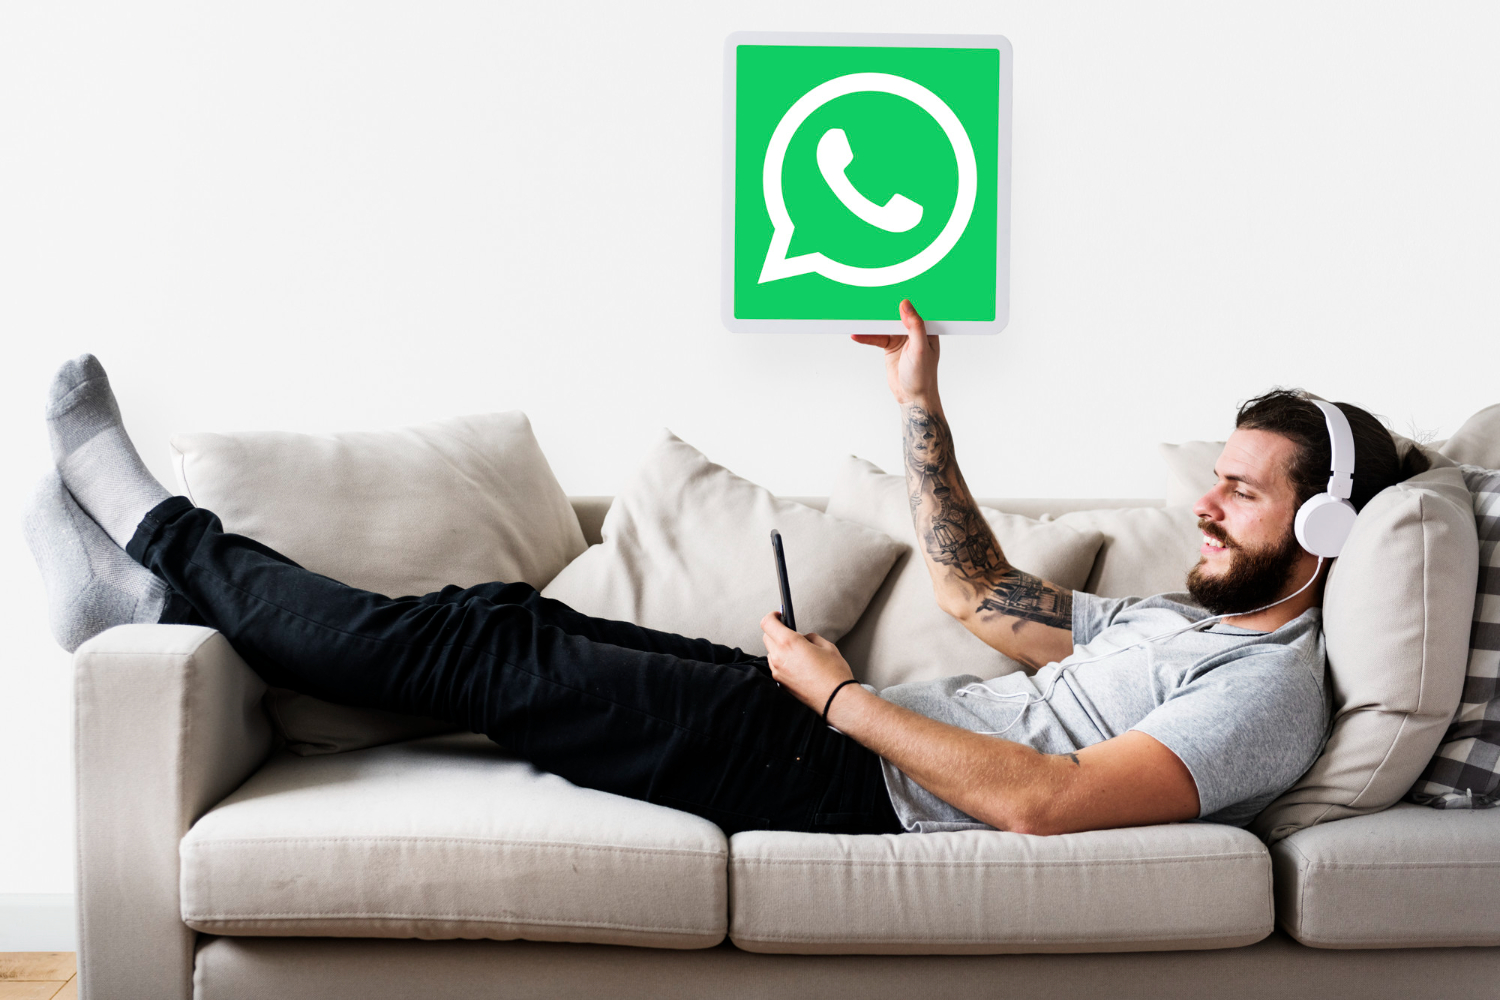 A Maçonaria Regular realiza convites por WhatsApp?